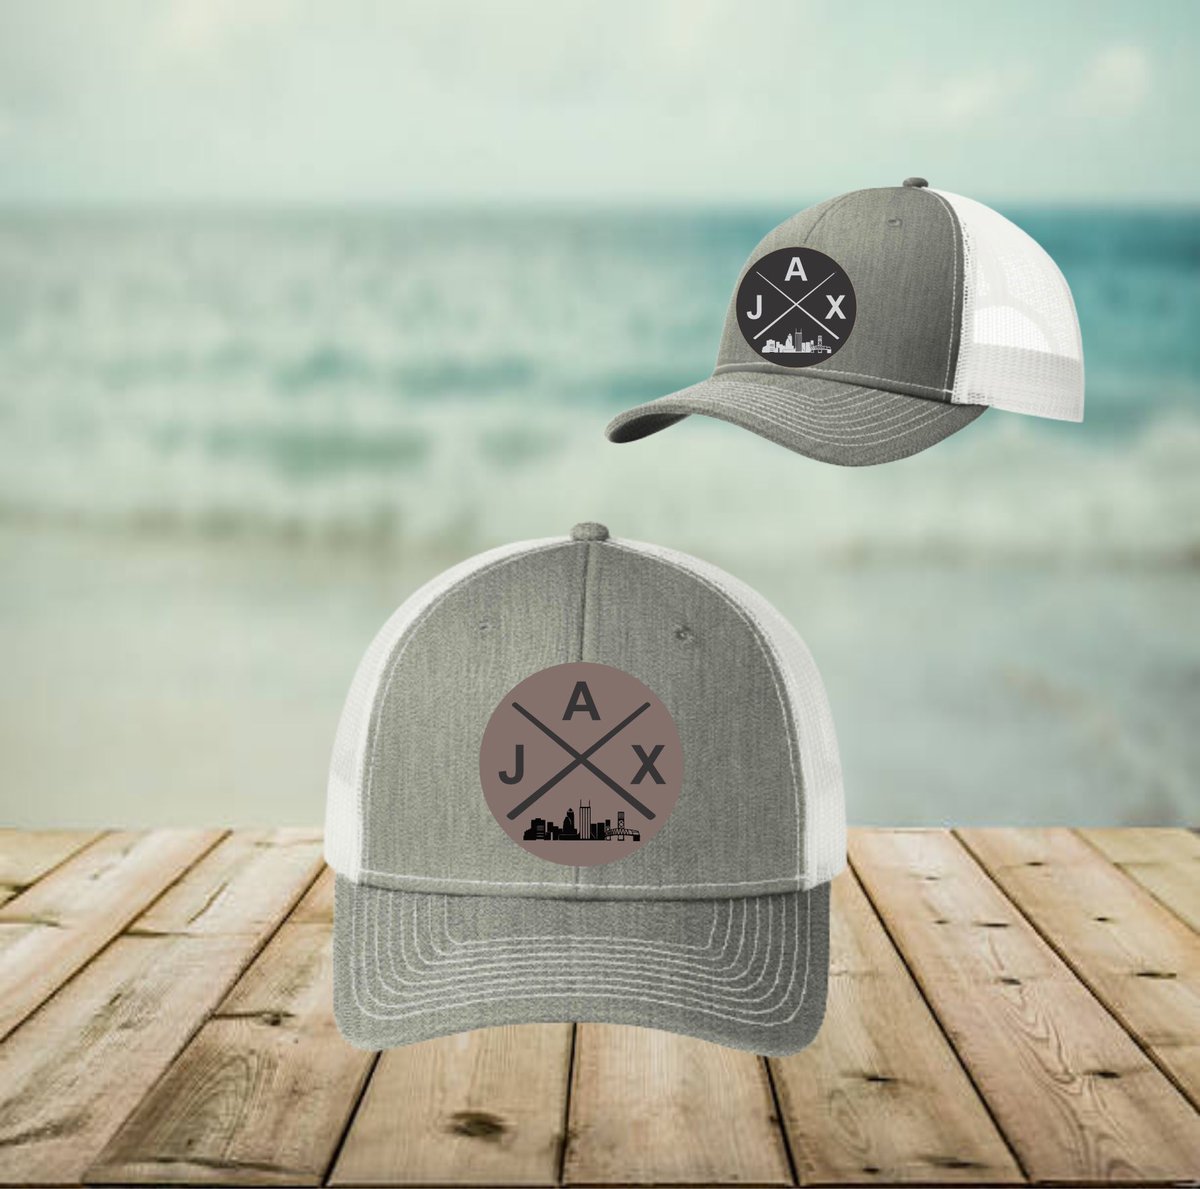 Vegan leather hat patches #veganleather #summerhats #beachhat #lakelife #jax904 #904happyhour #customhats